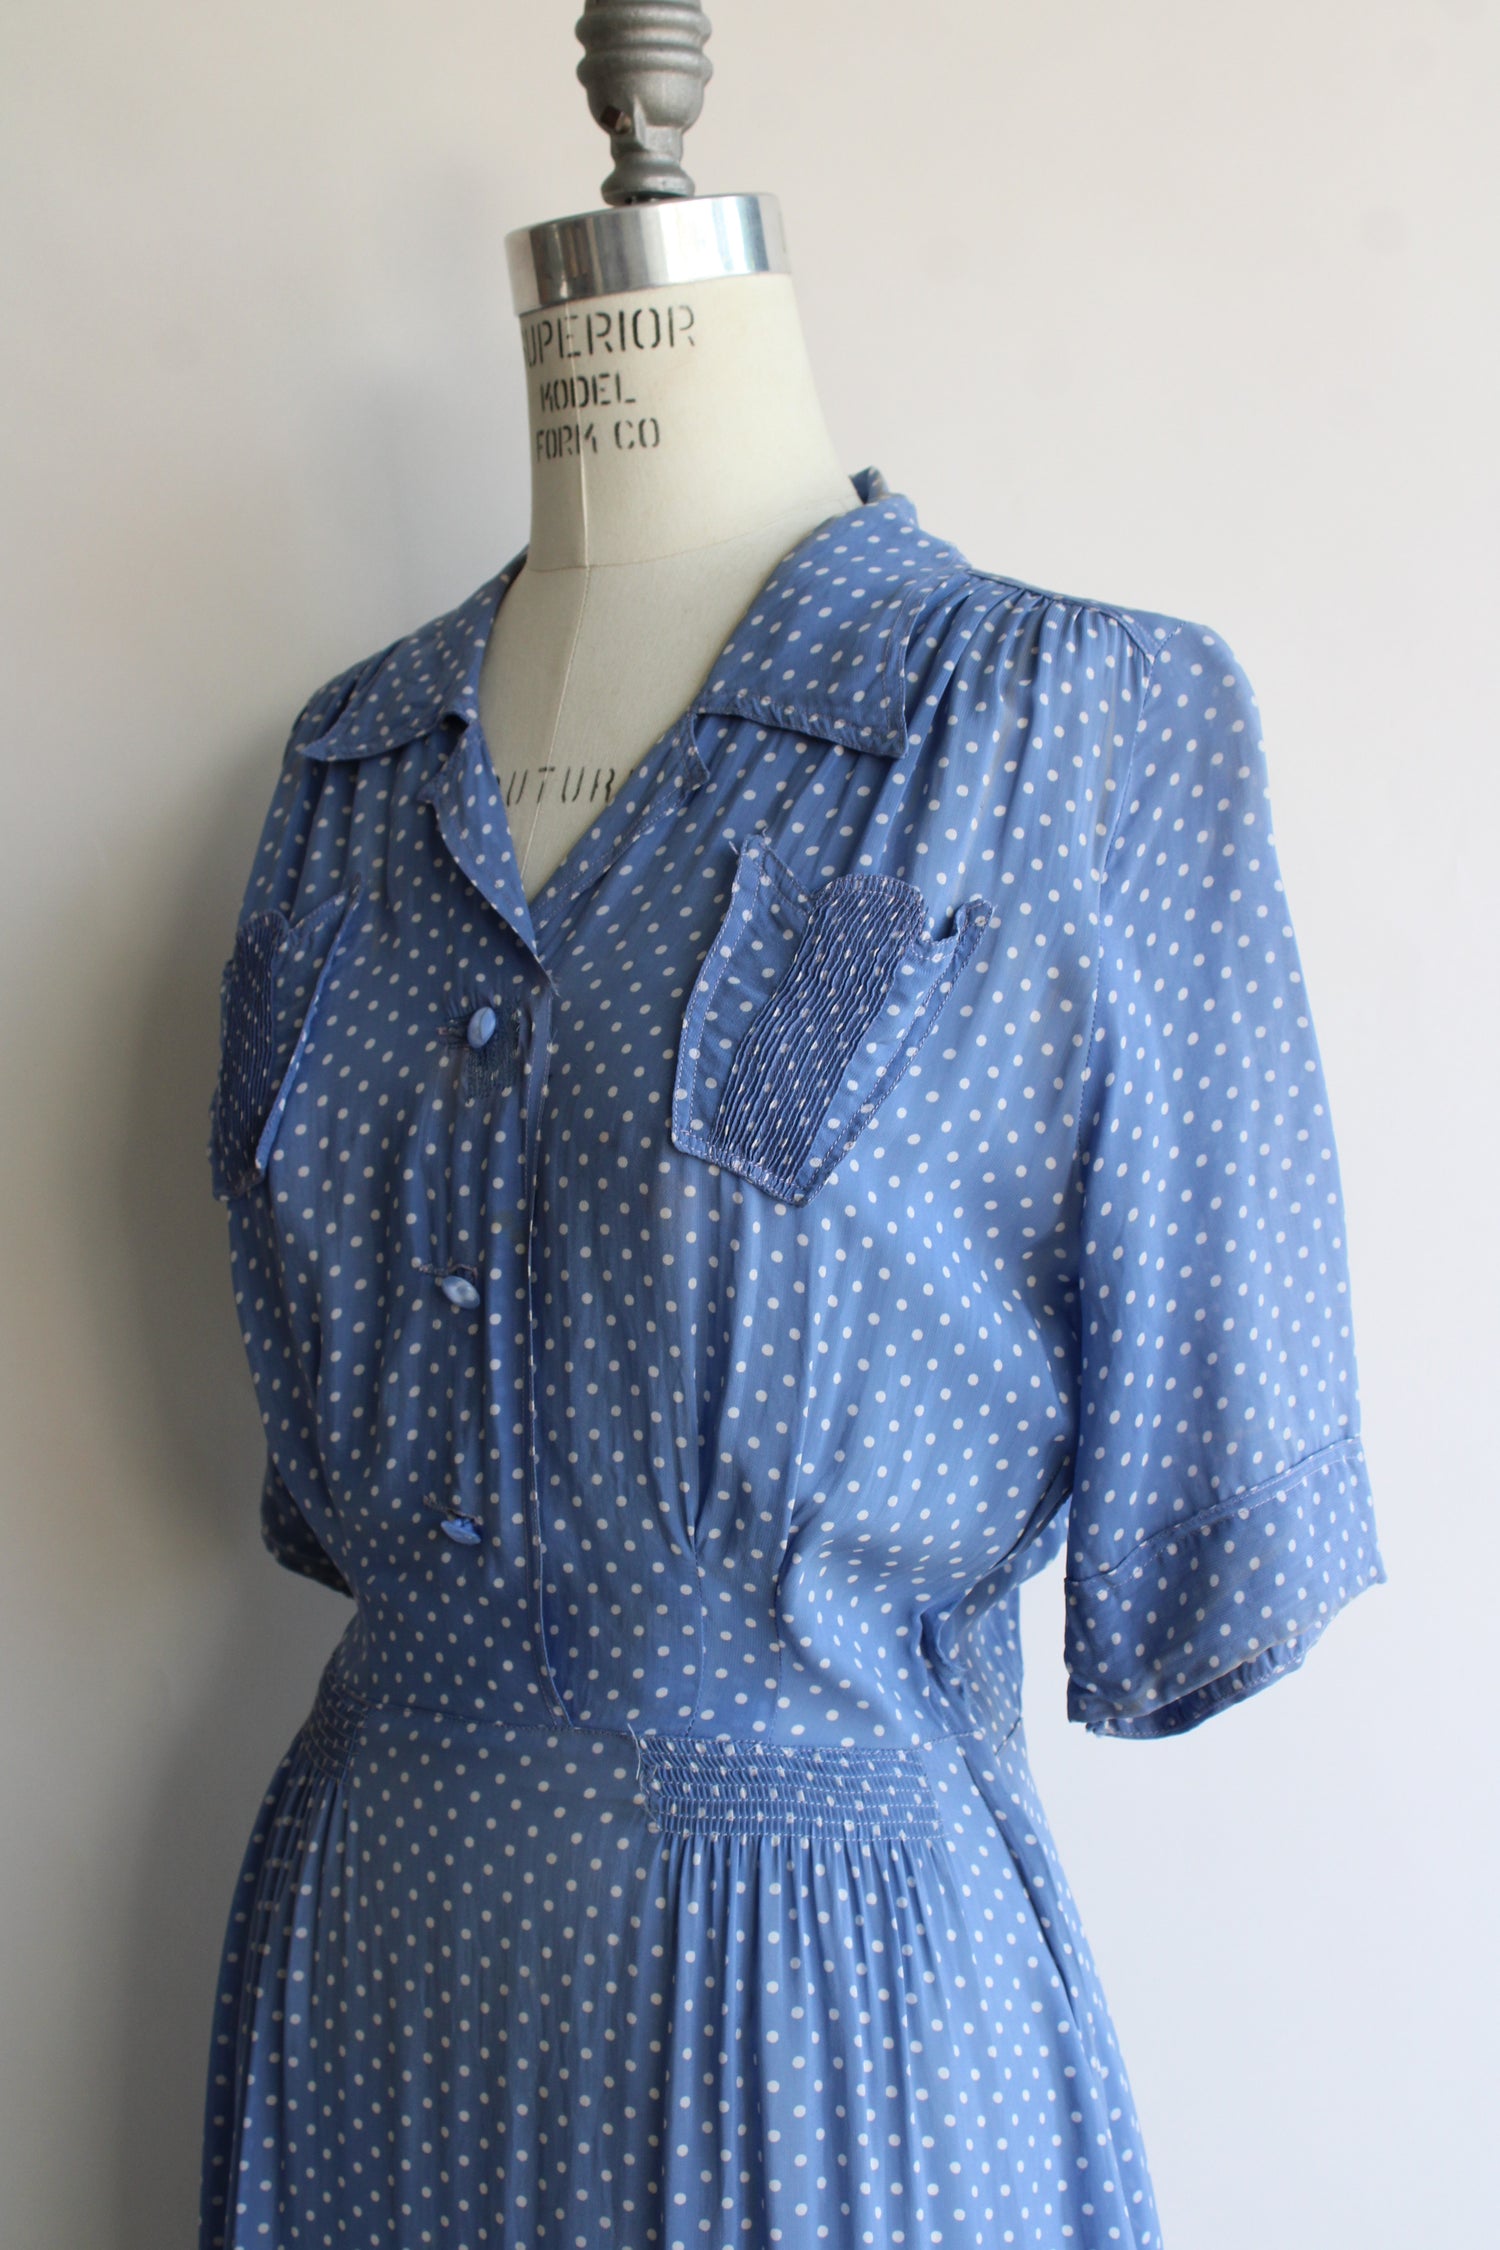 Vintage 1940s Blue and White Polka Dot Rayon Dress